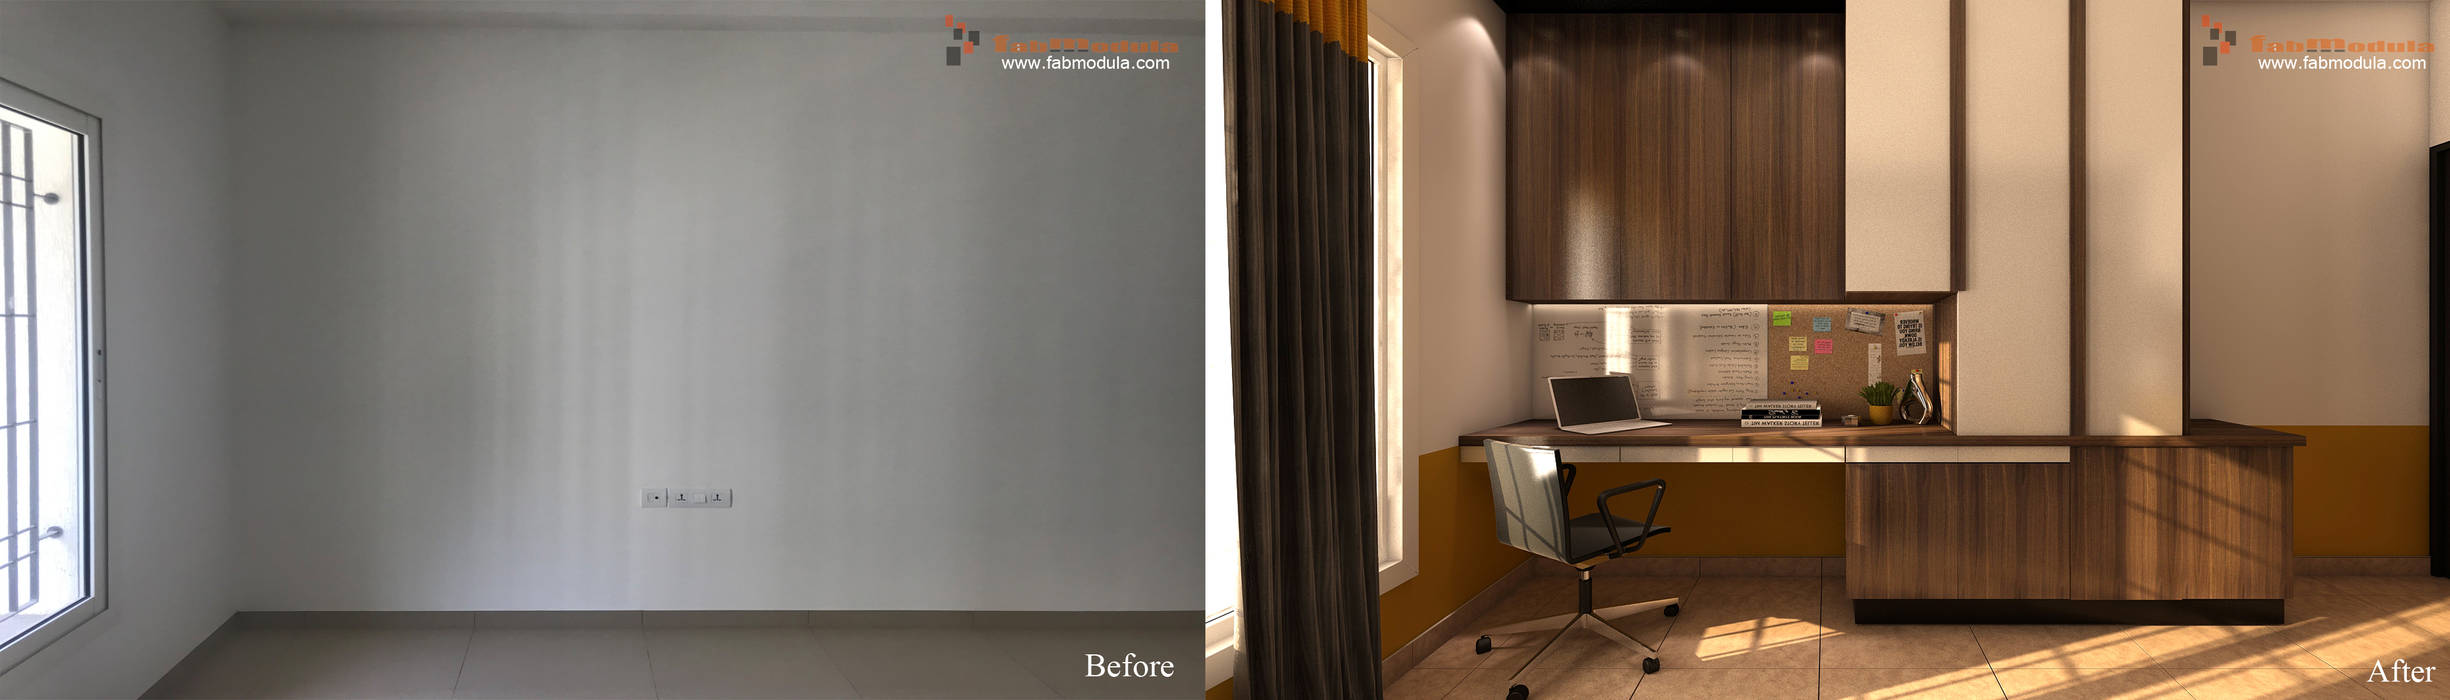 Before and after home interiors, Fabmodula Fabmodula